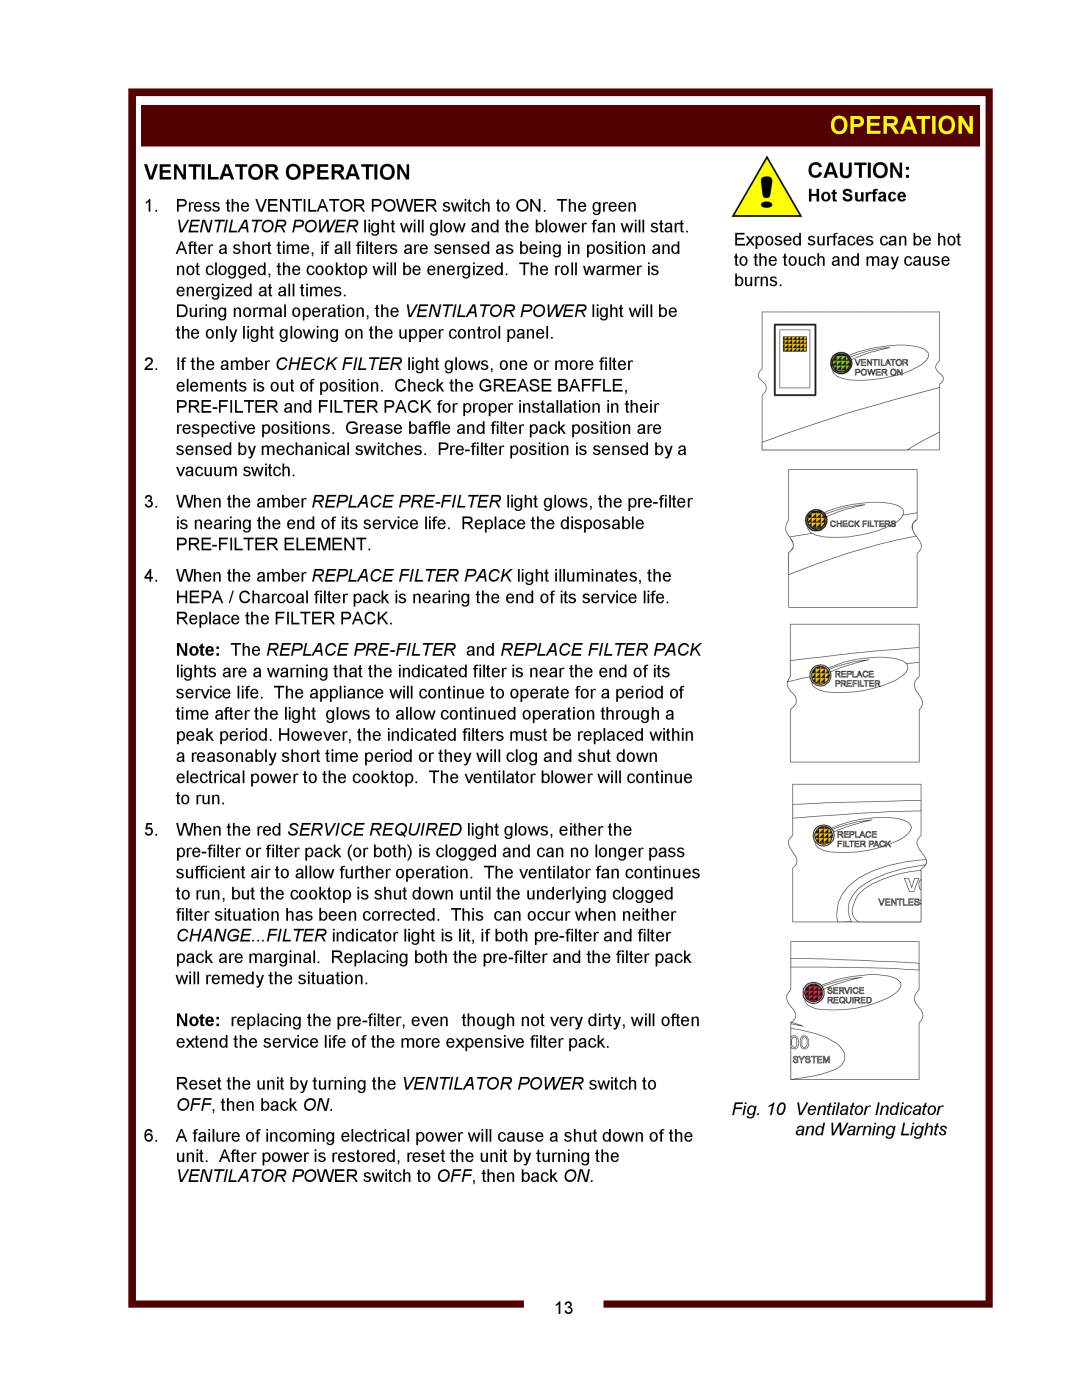 Wells WV-4HSRW operation manual Ventilator Operation, Hot Surface, Ventilator Indicator and Warning Lights 